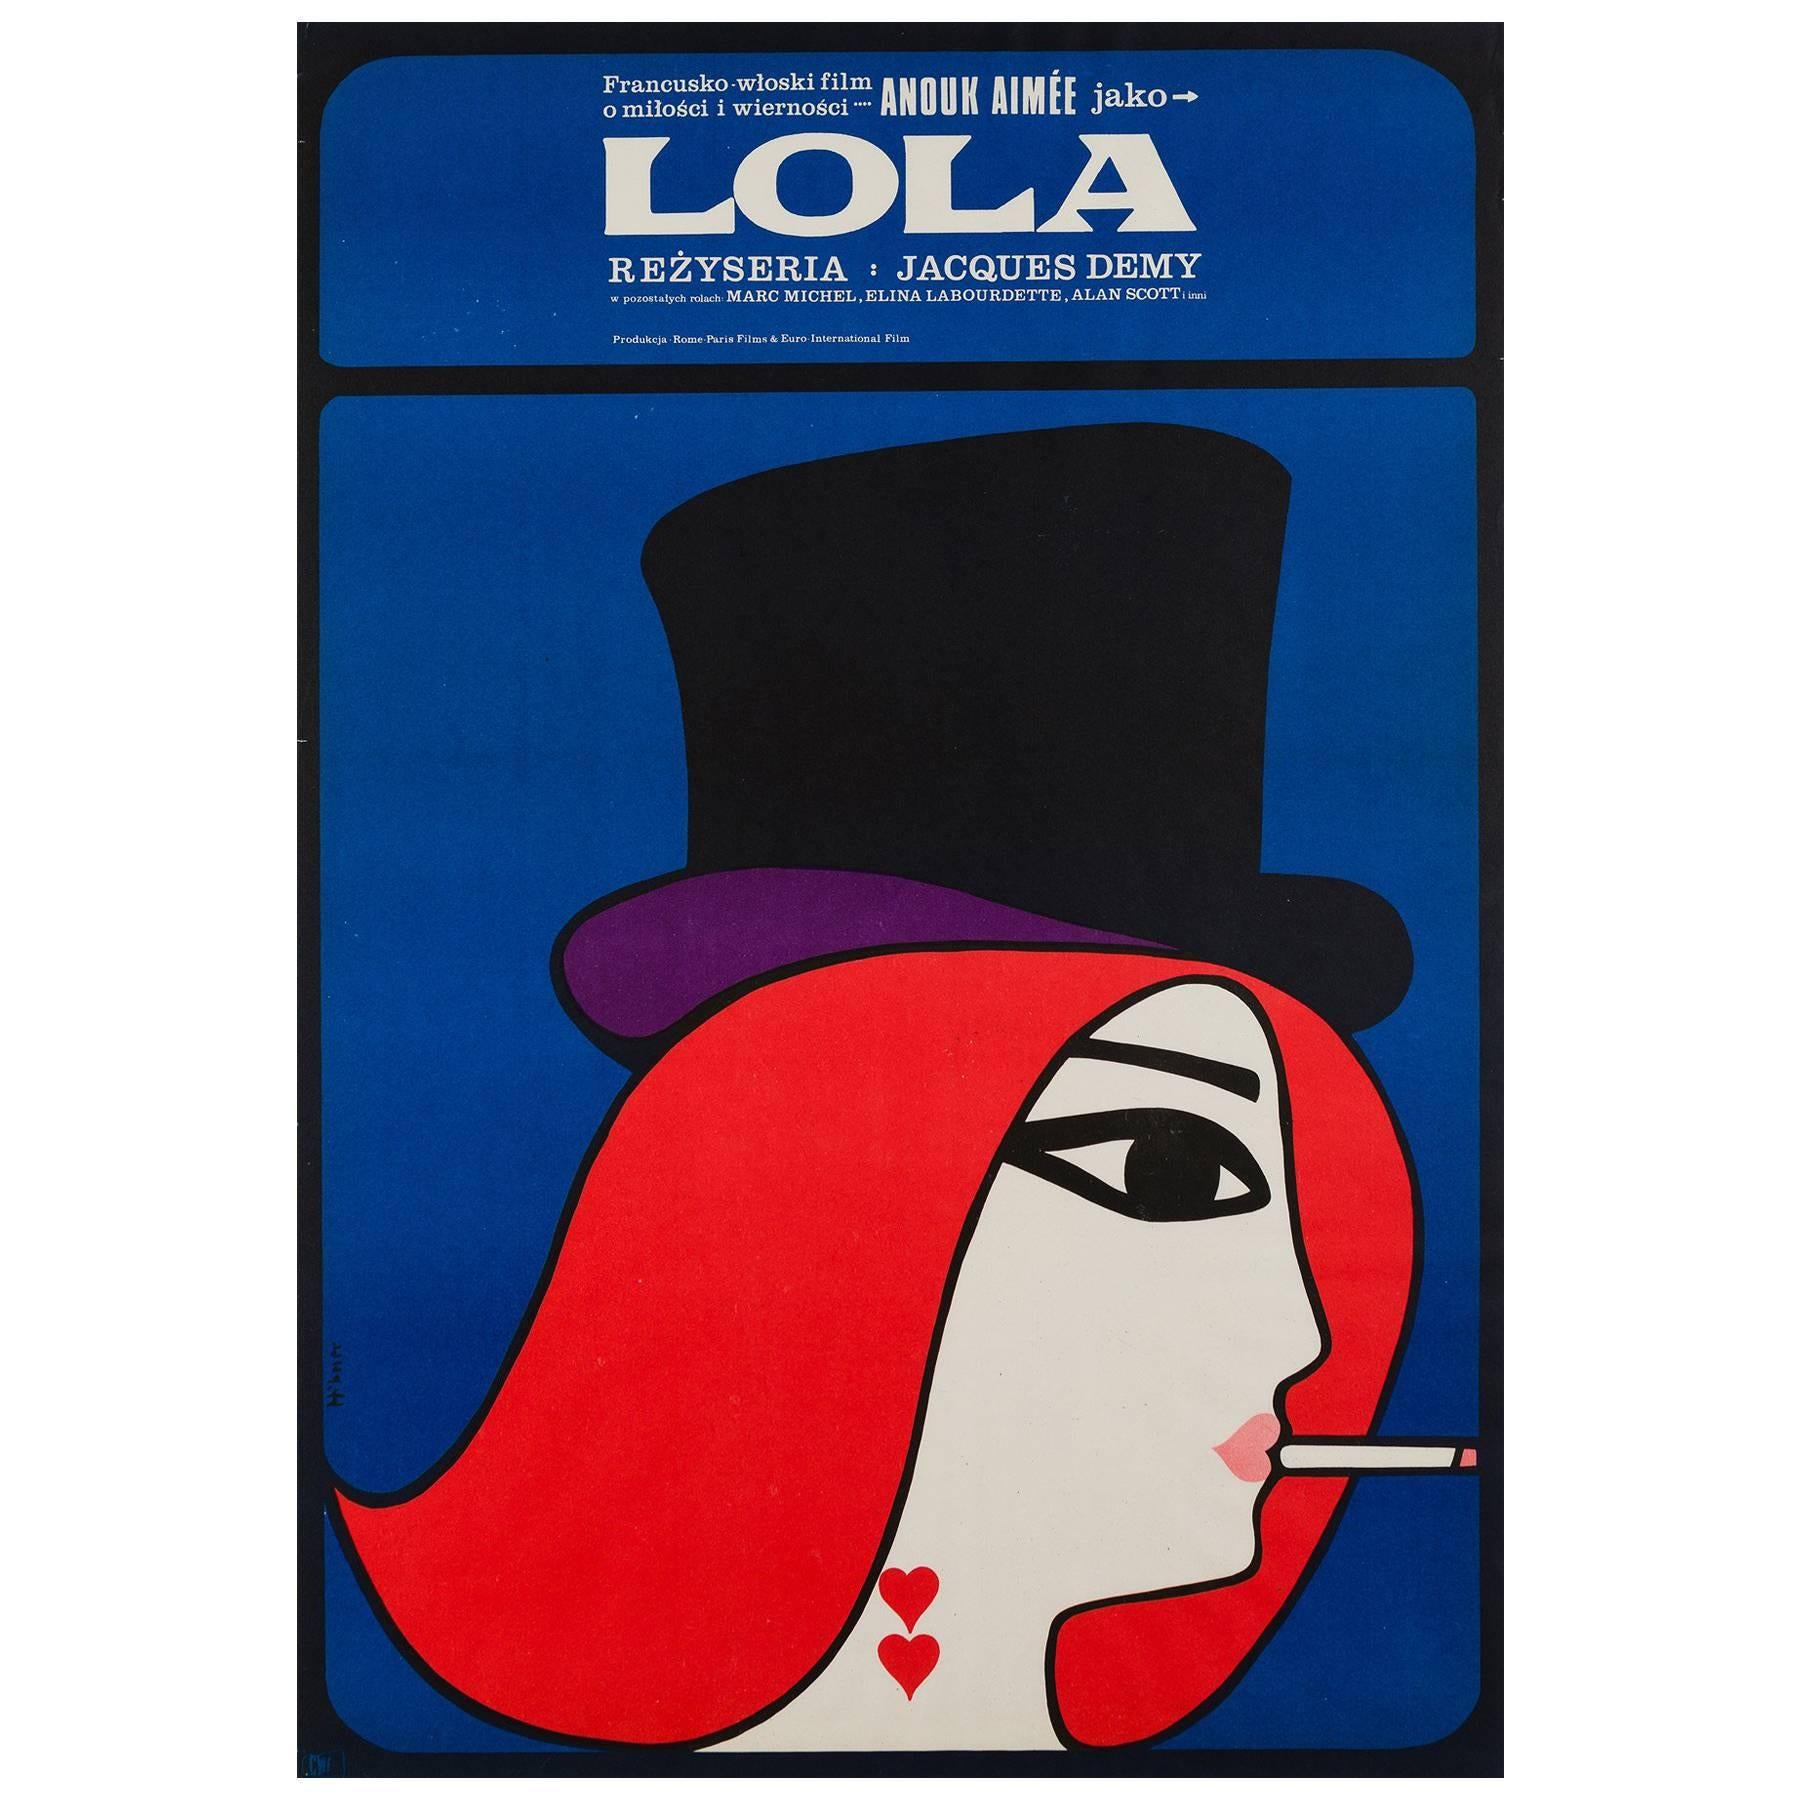 Lola Original Polish Film Poster, Maciej Hibner, 1967